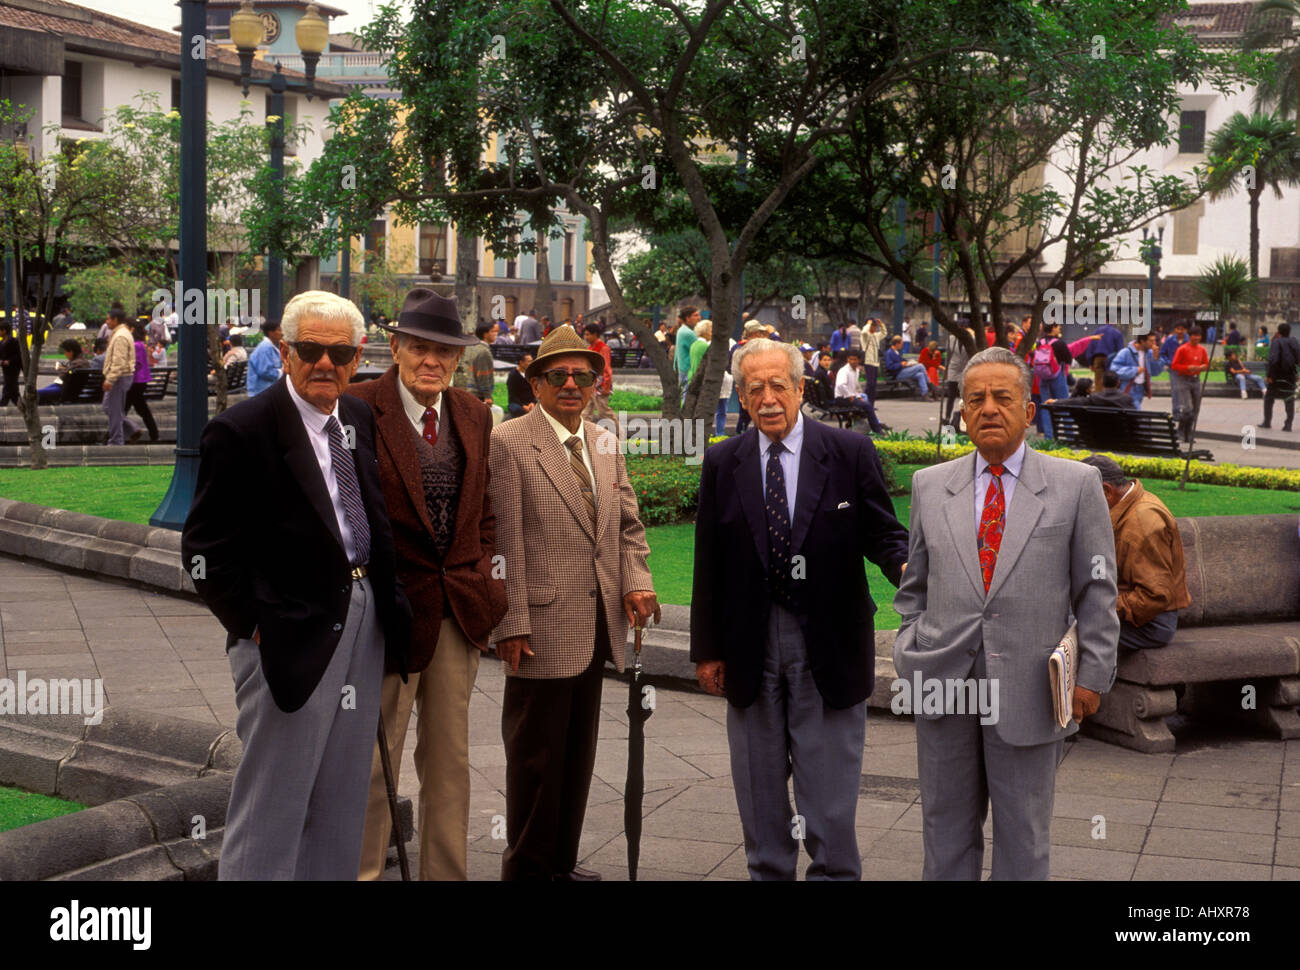 5, five, Ecuadorans, Ecuadoran, adult men, public square, Plaza de la Independencia, Independence Square, Quito, Pichincha Province, Ecuador Stock Photo